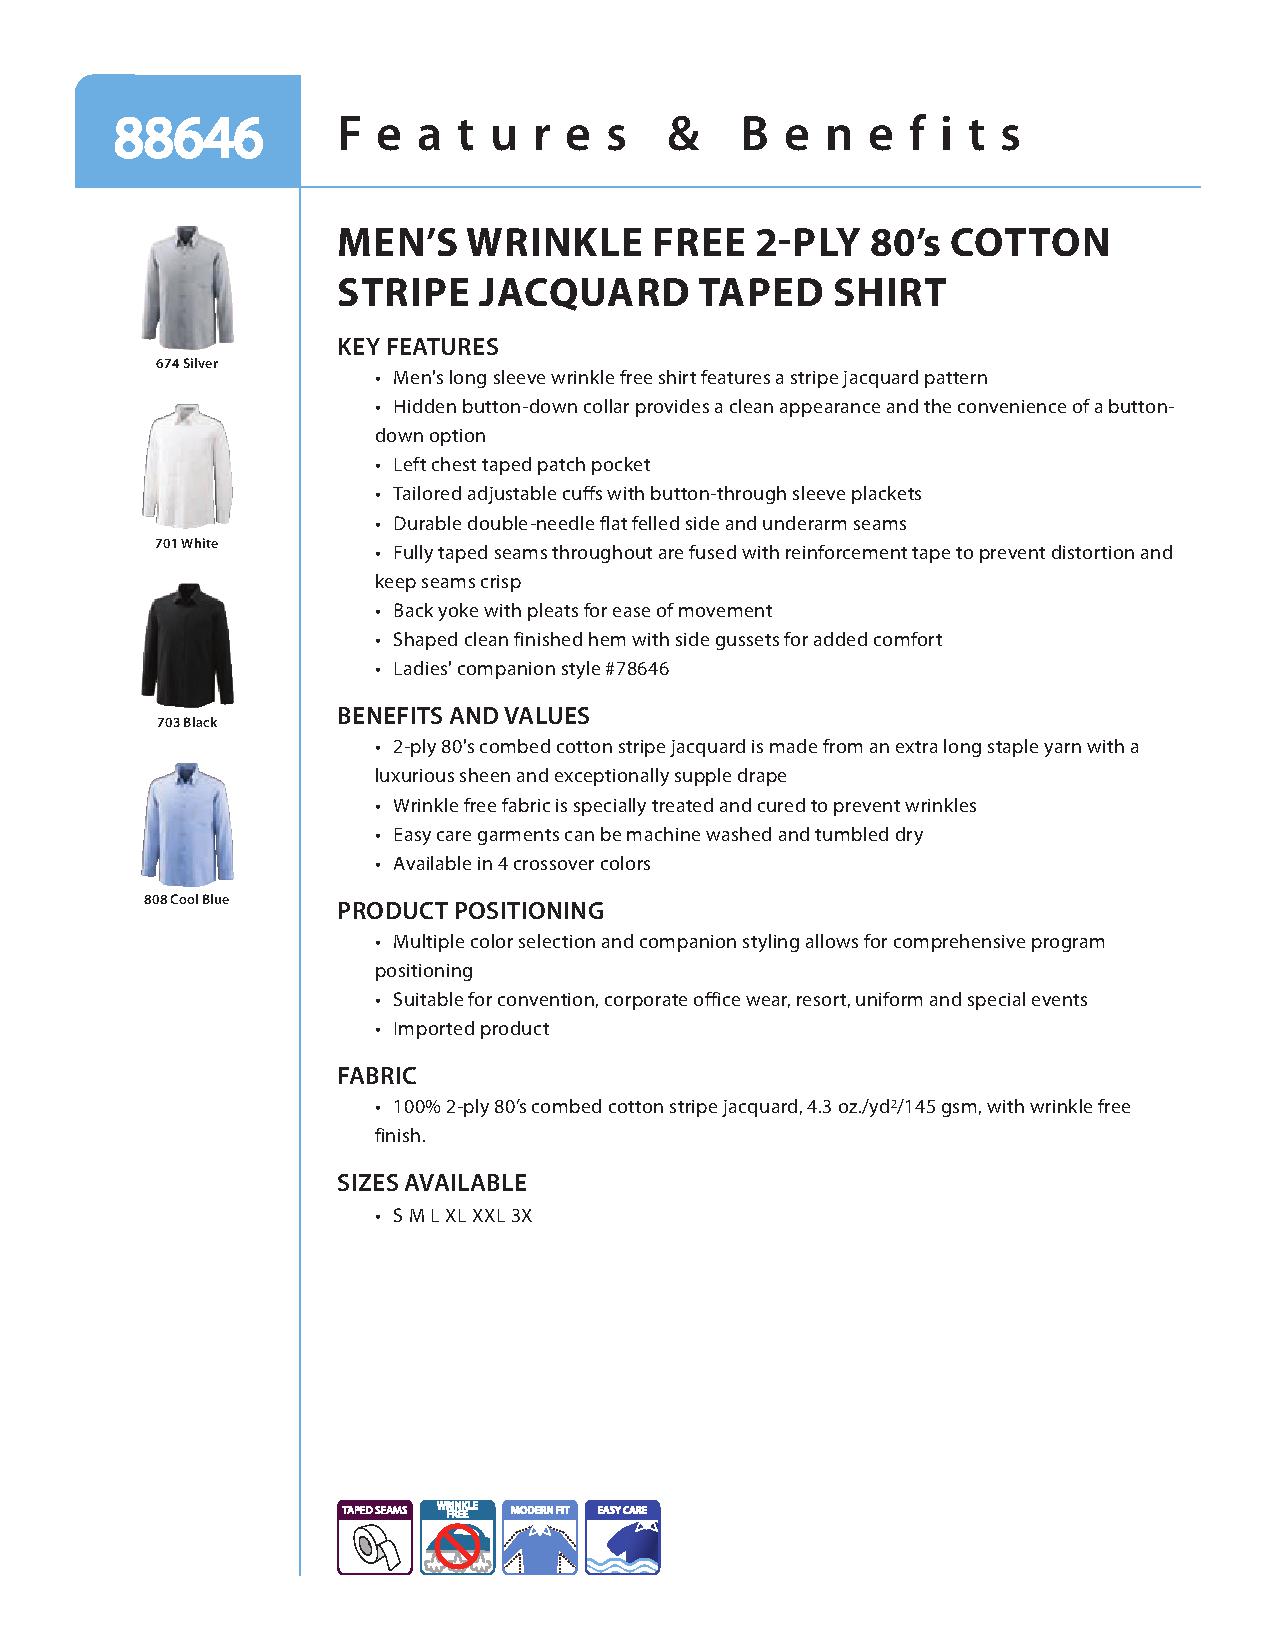 Ash City Wrinkle Free 88646 - Men's Wrinkle Free 2-Ply 80's Cotton Stripe Jacquard Taped Shirt